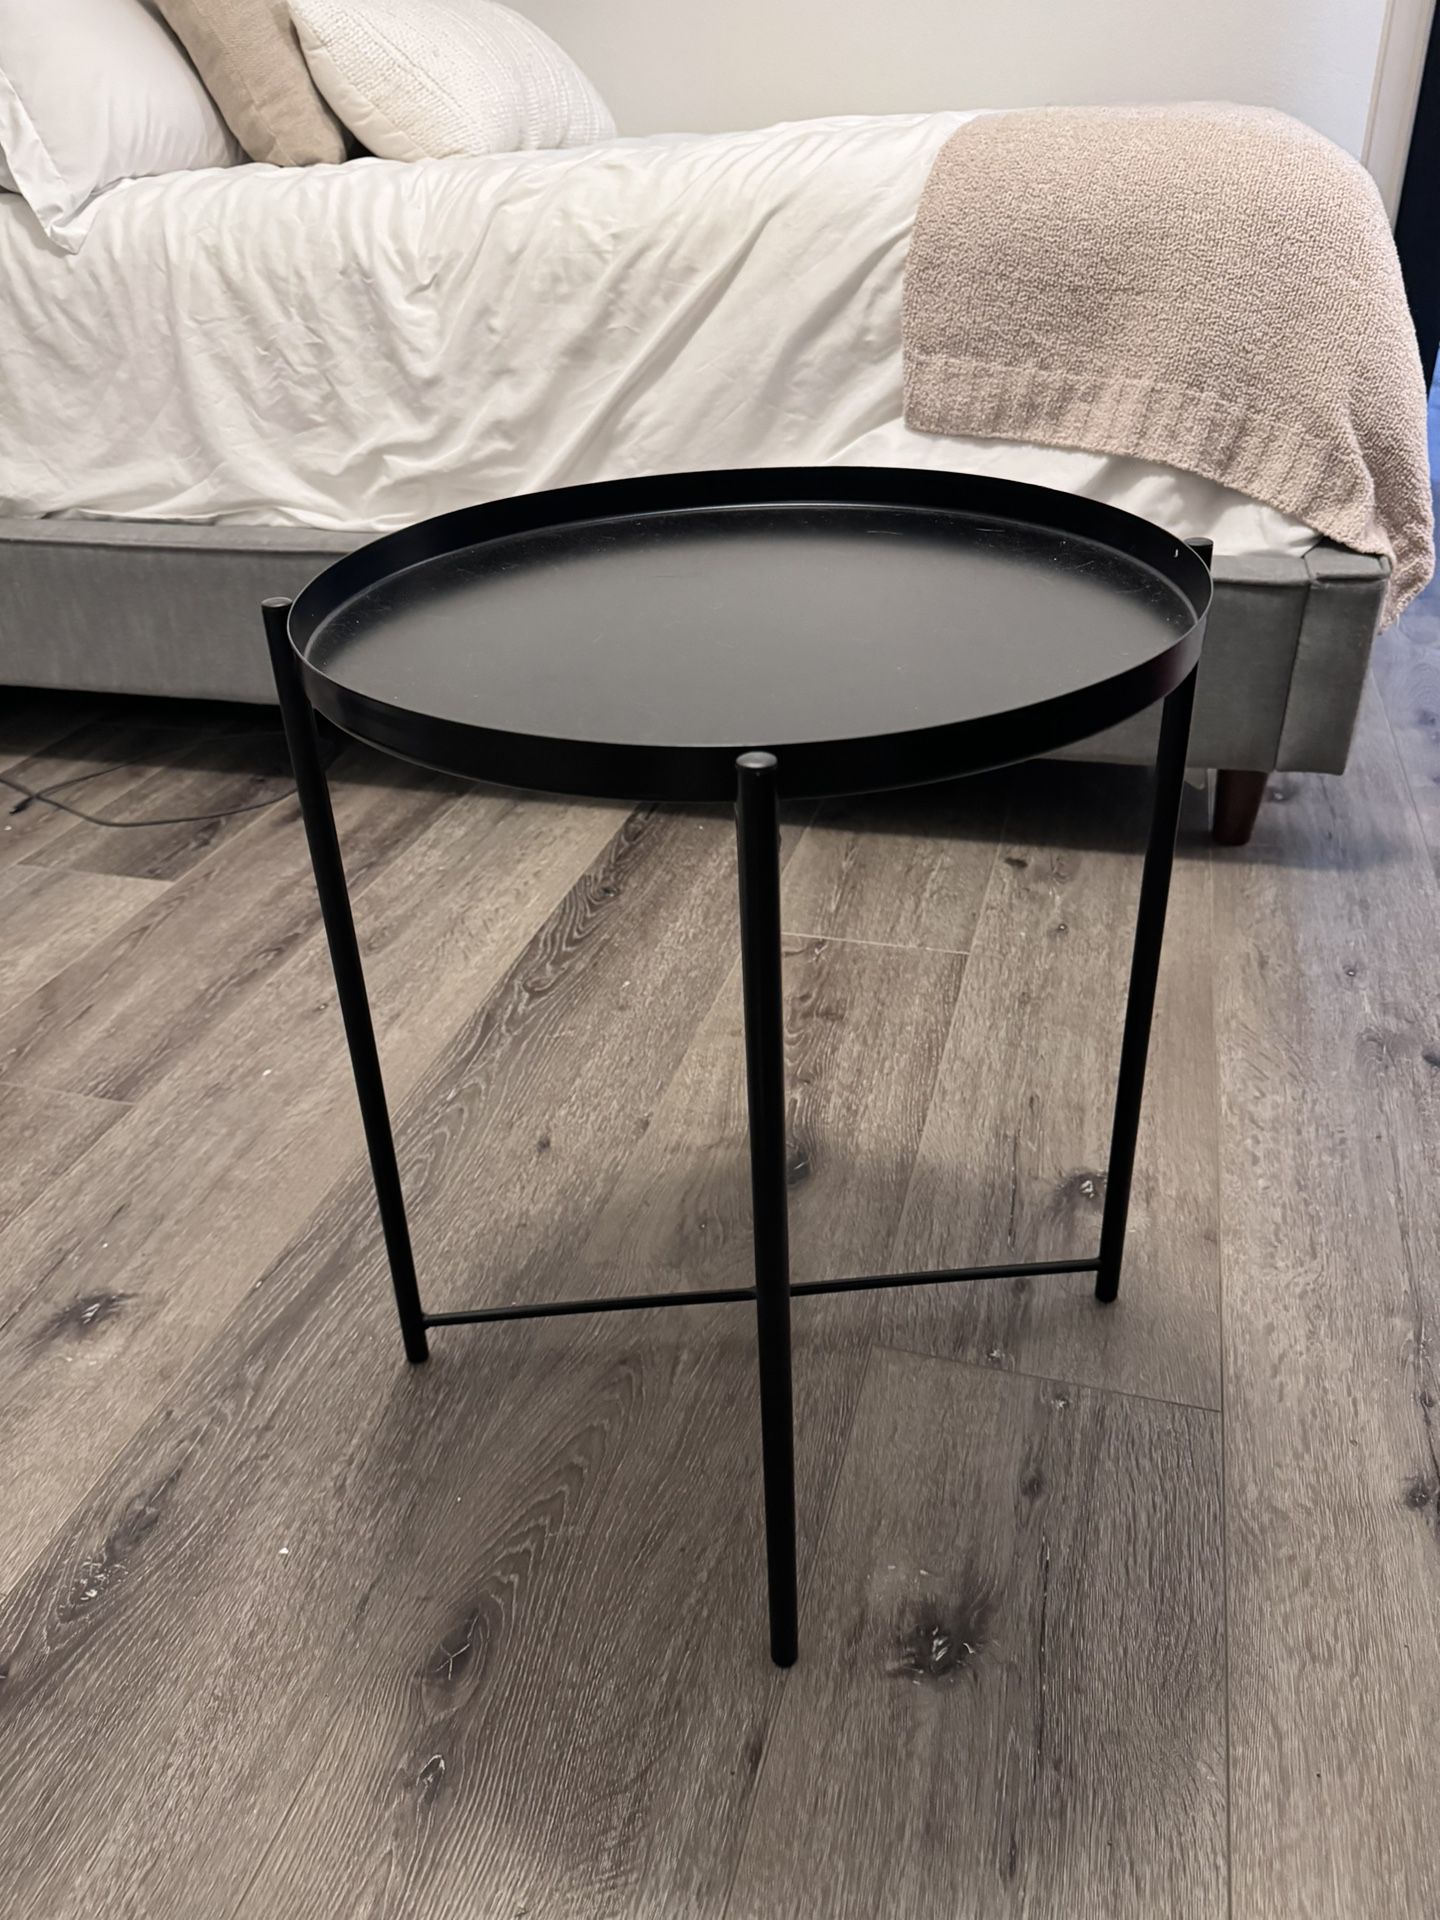 Ikea GLADOM Tray Table